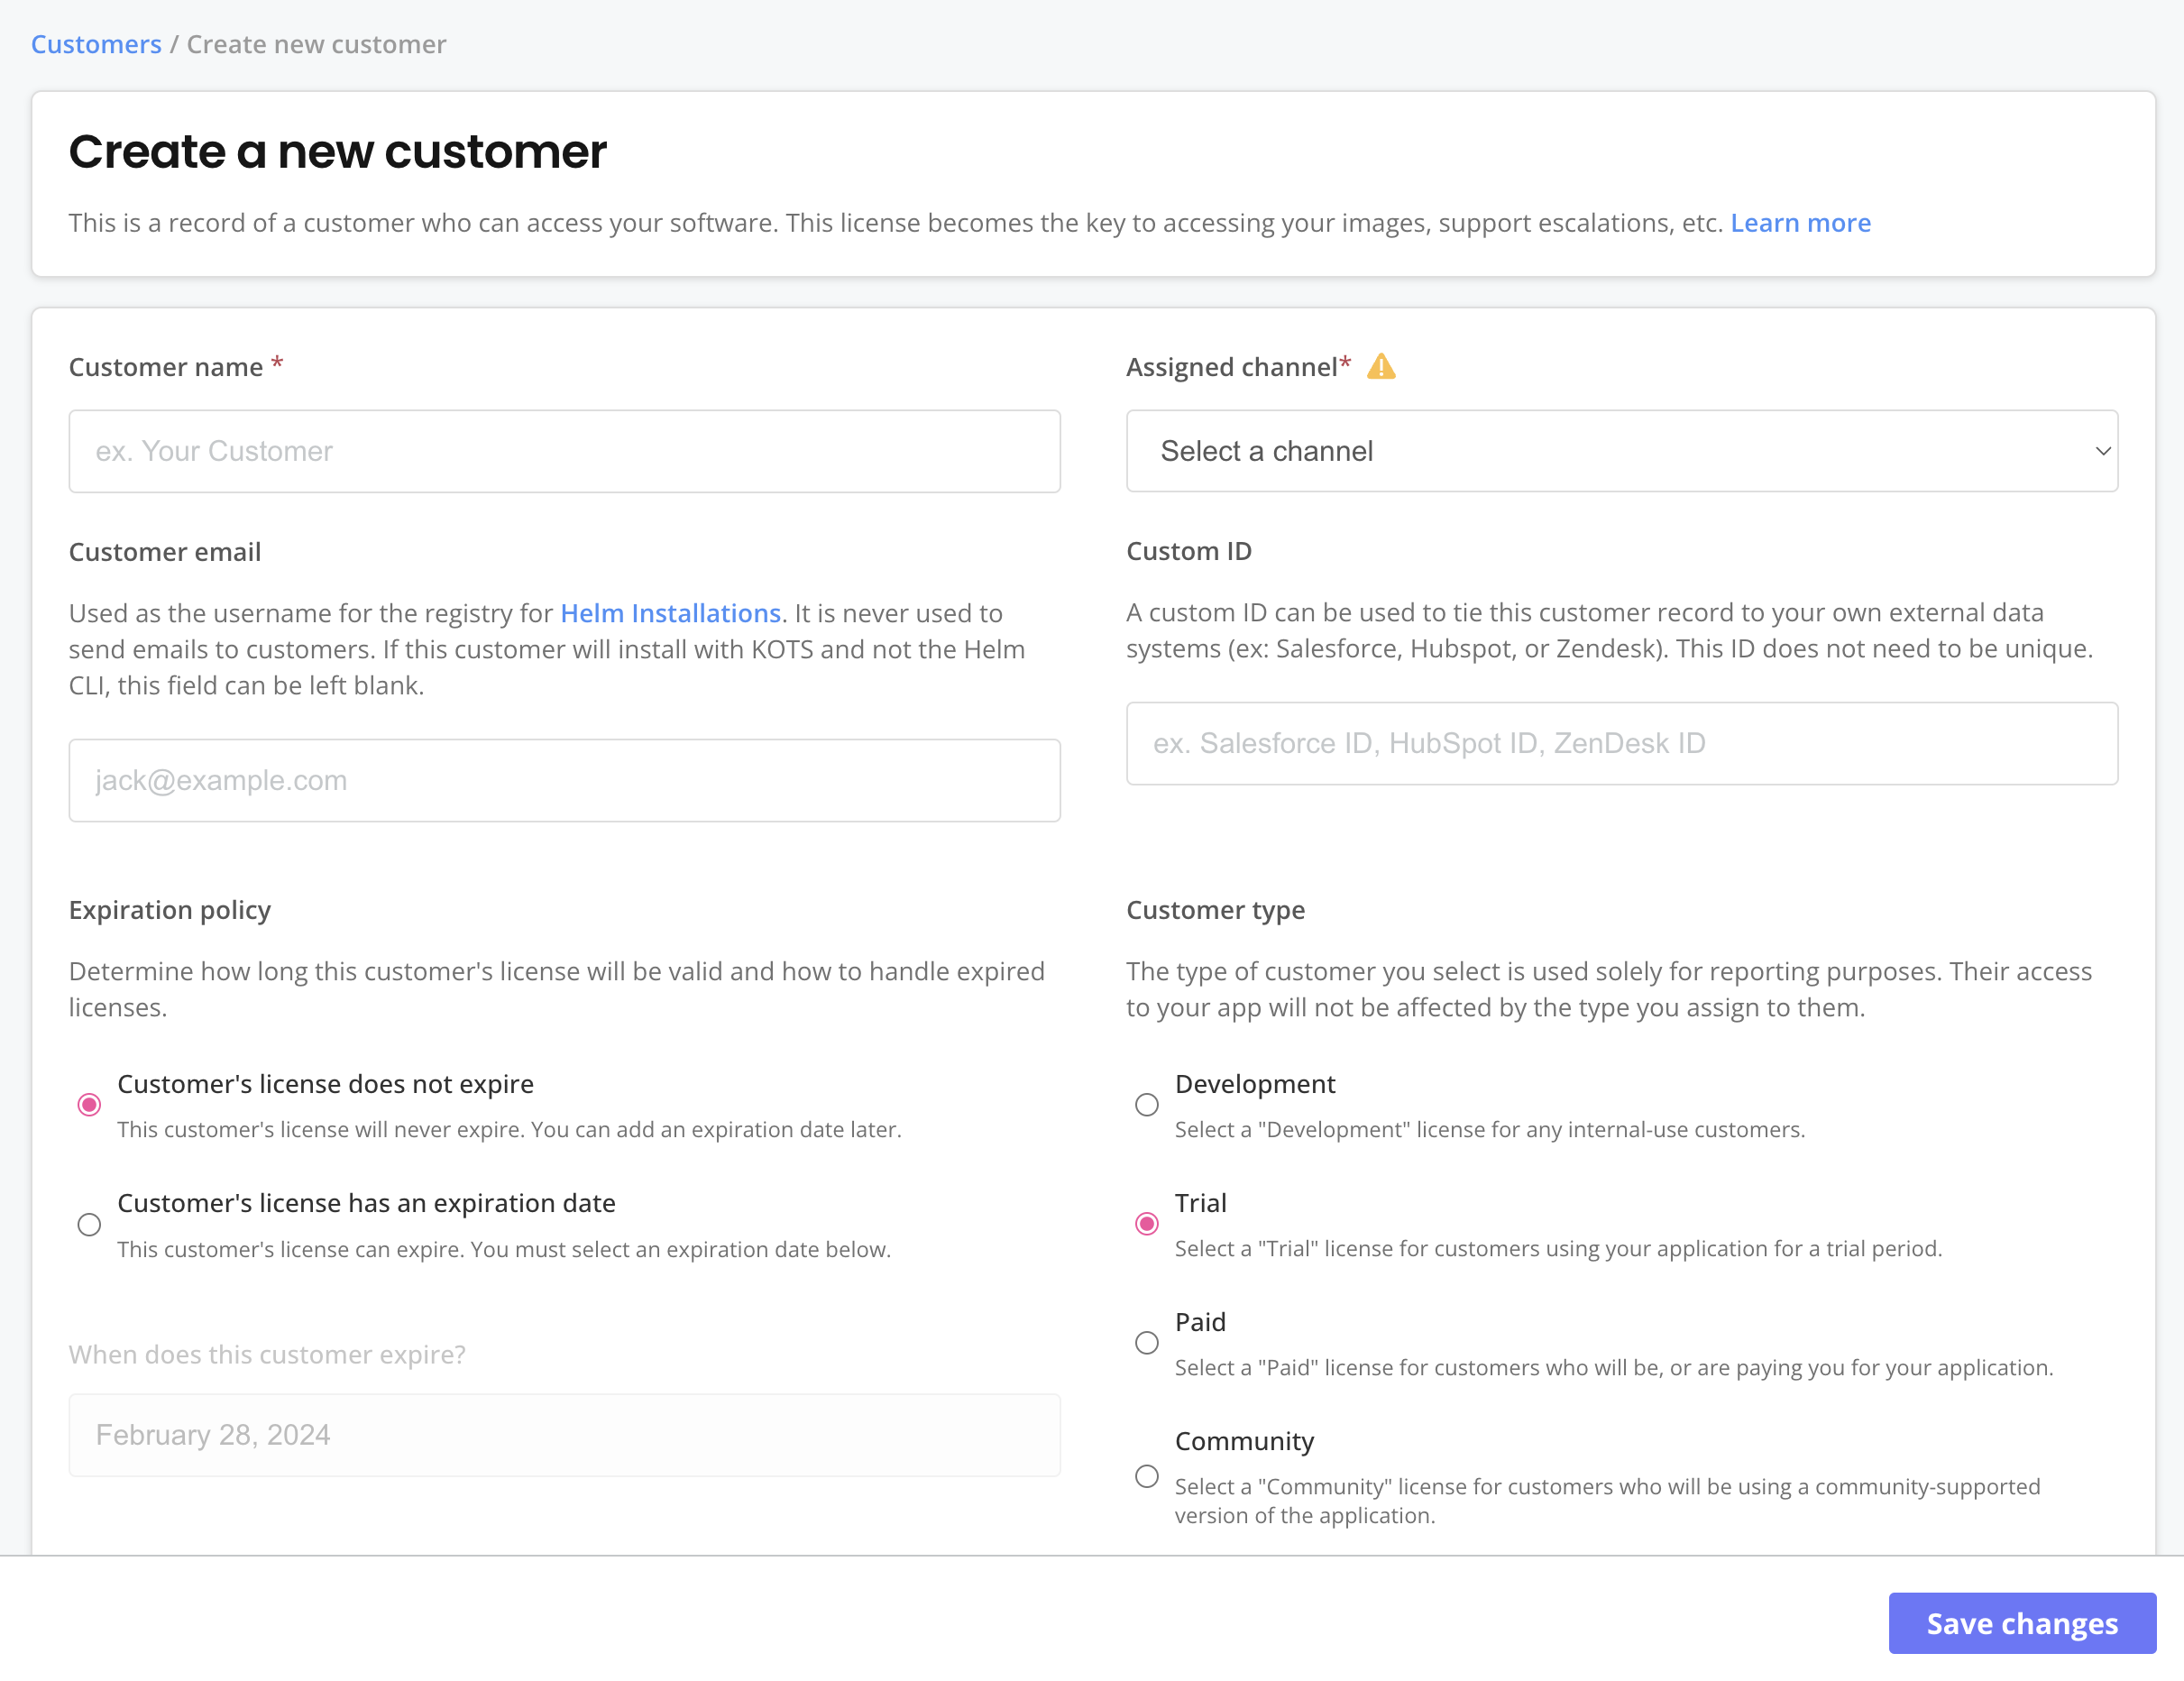 Customer a new customer page in the vendor portal